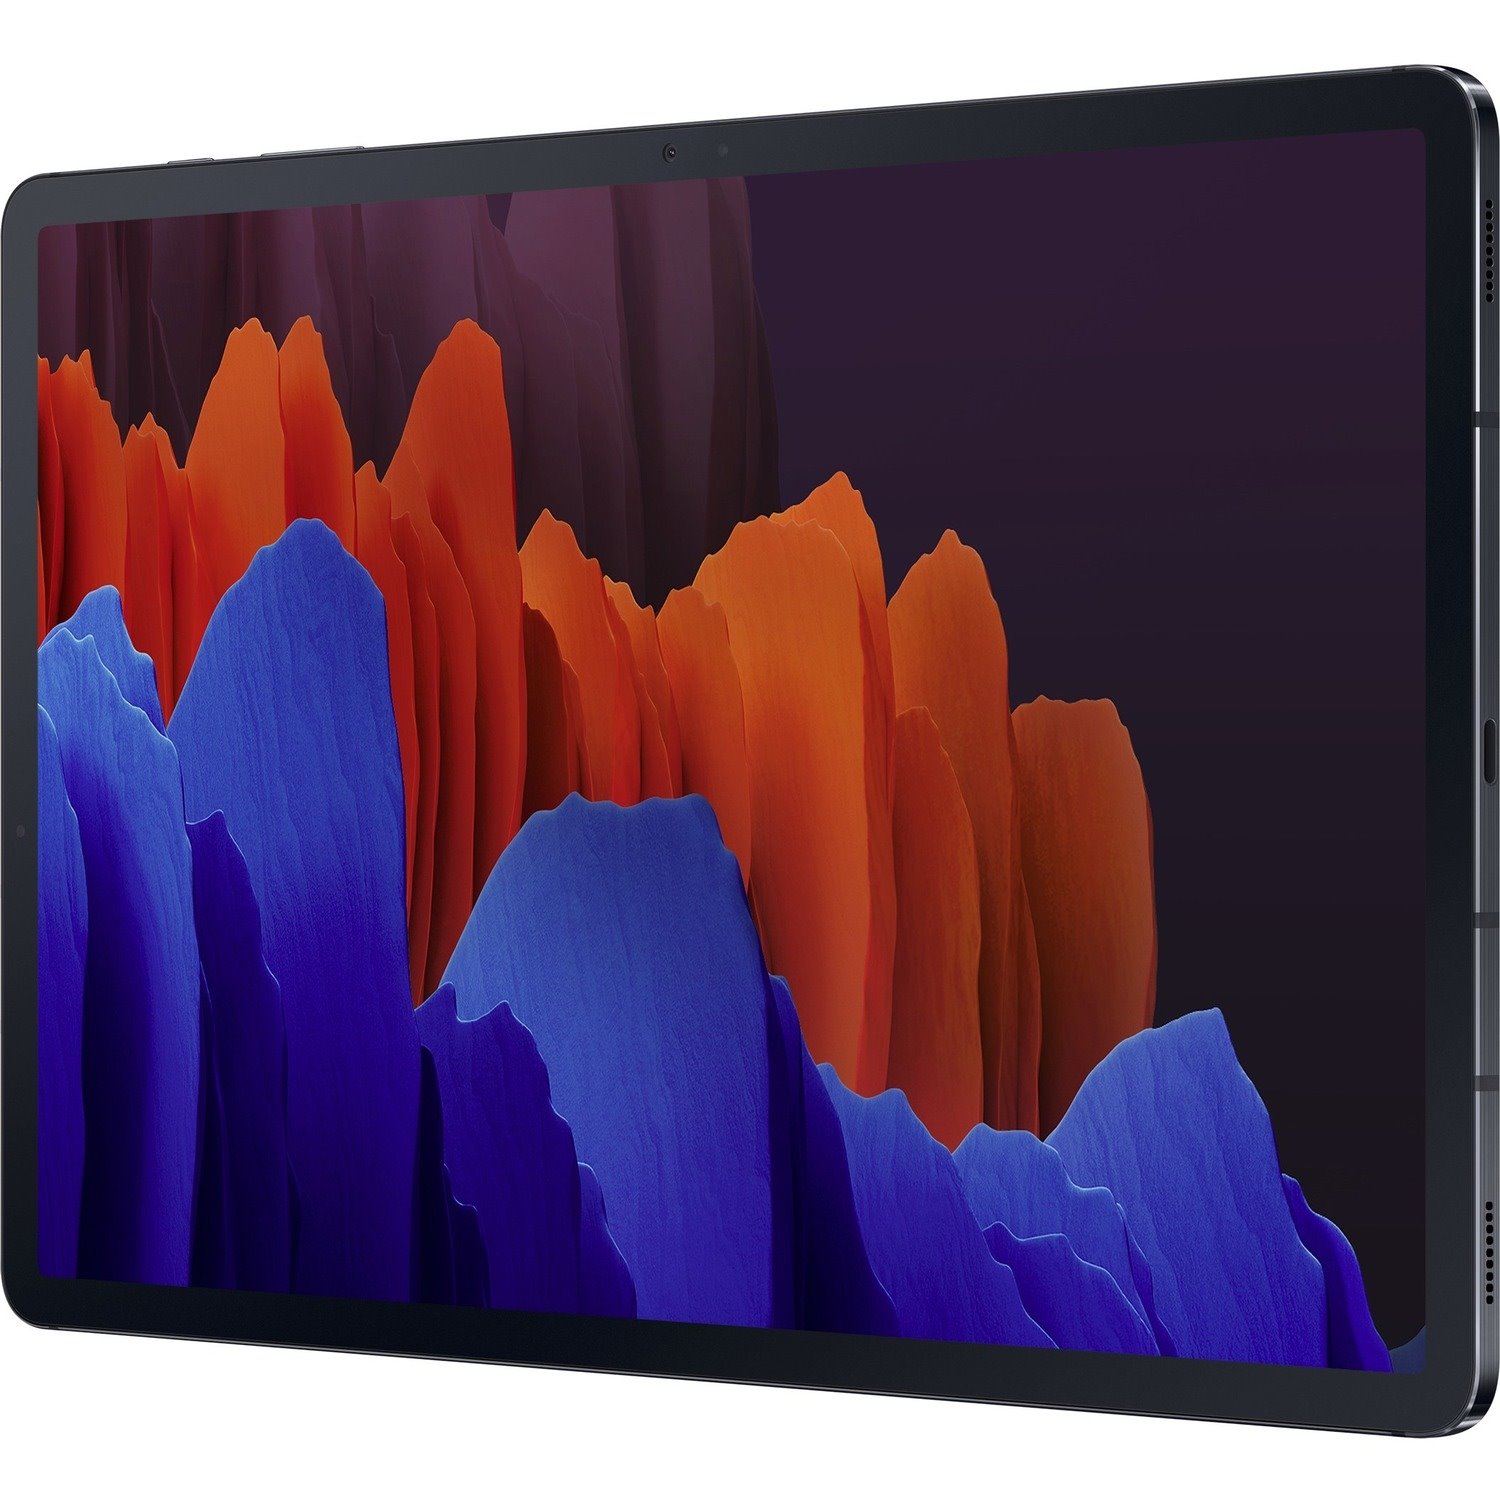 Samsung Galaxy Tab S7+ SM-T970 Tablet - 12.4" WQXGA+ - Qualcomm Snapdragon 865 Plus - 6 GB - 128 GB Storage - Android 10 - Mystical Black